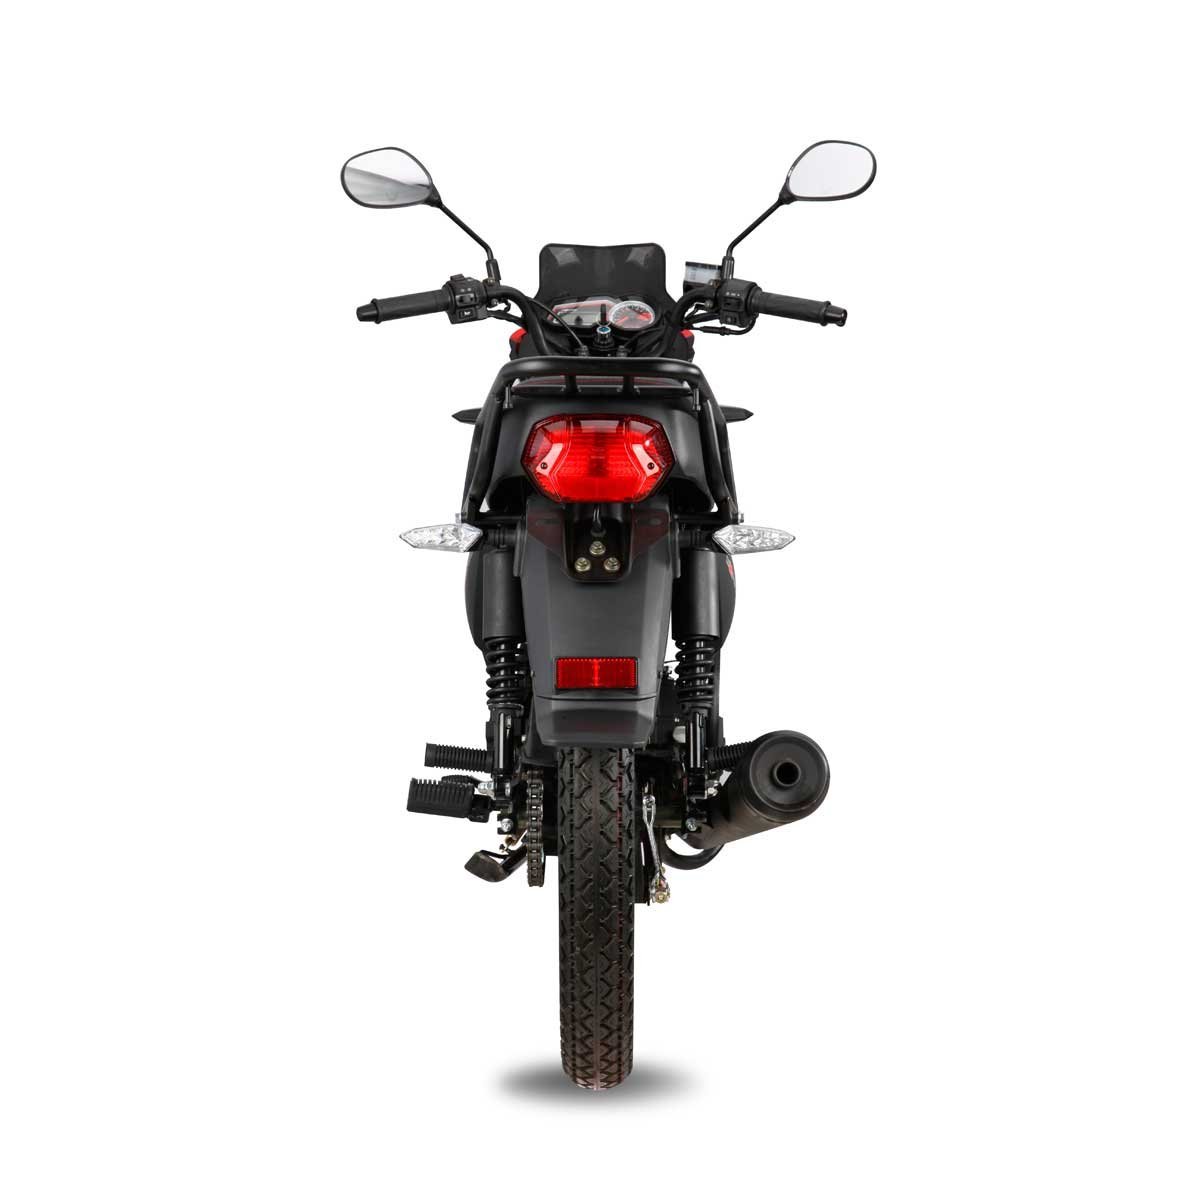 Motocicleta Lithium 150Cc 2019 Vento